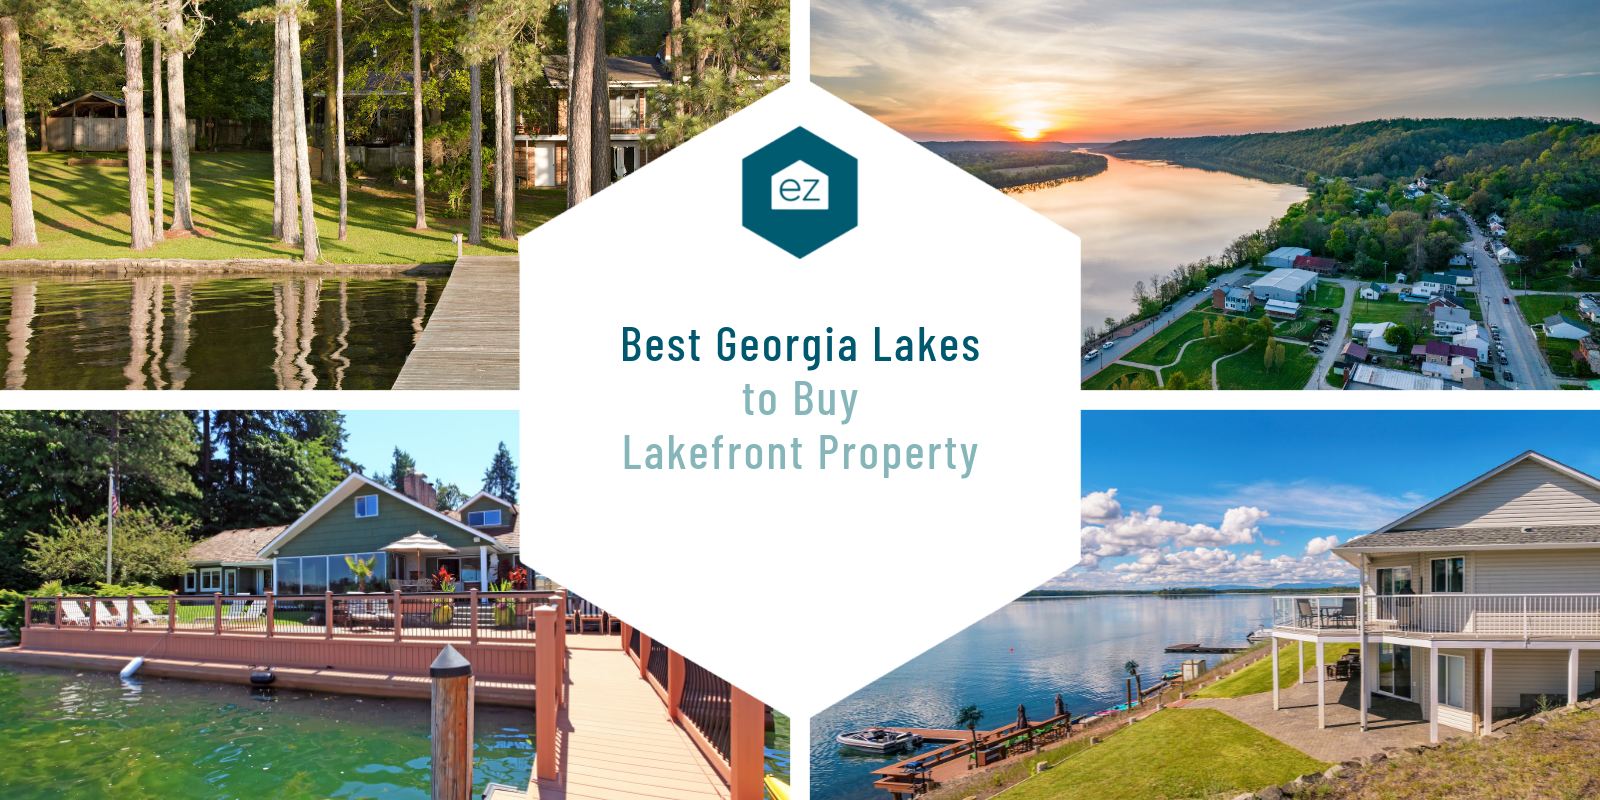 Lakefront Properties to Buy in GA